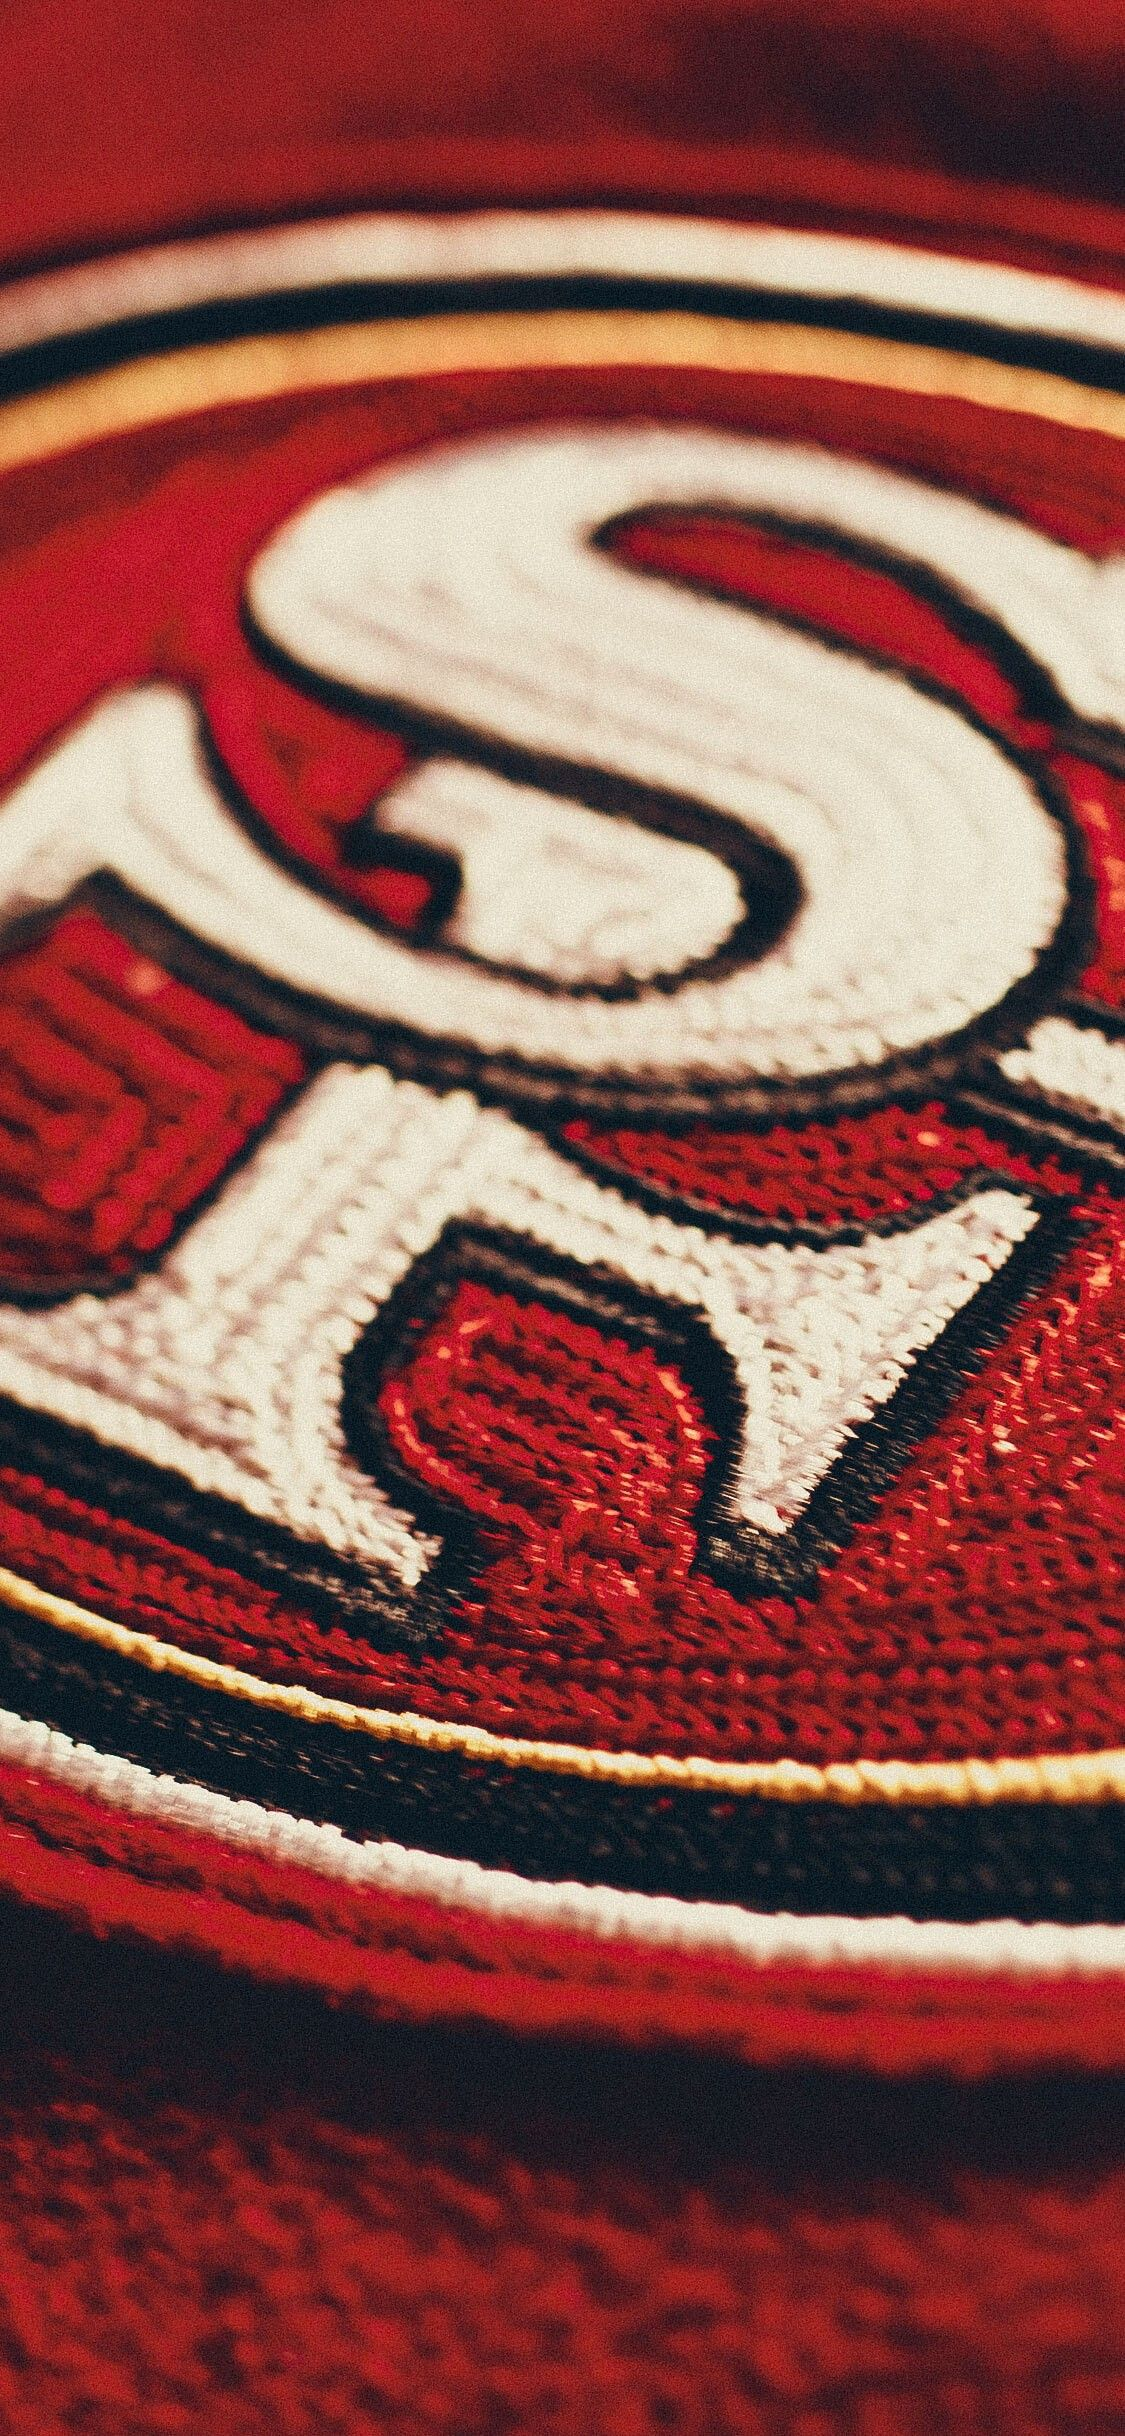 1125x2436 San Francisco 49ers Wallpaper | Nfl football 49ers, San francisco 49ers football, San francisco 49ers